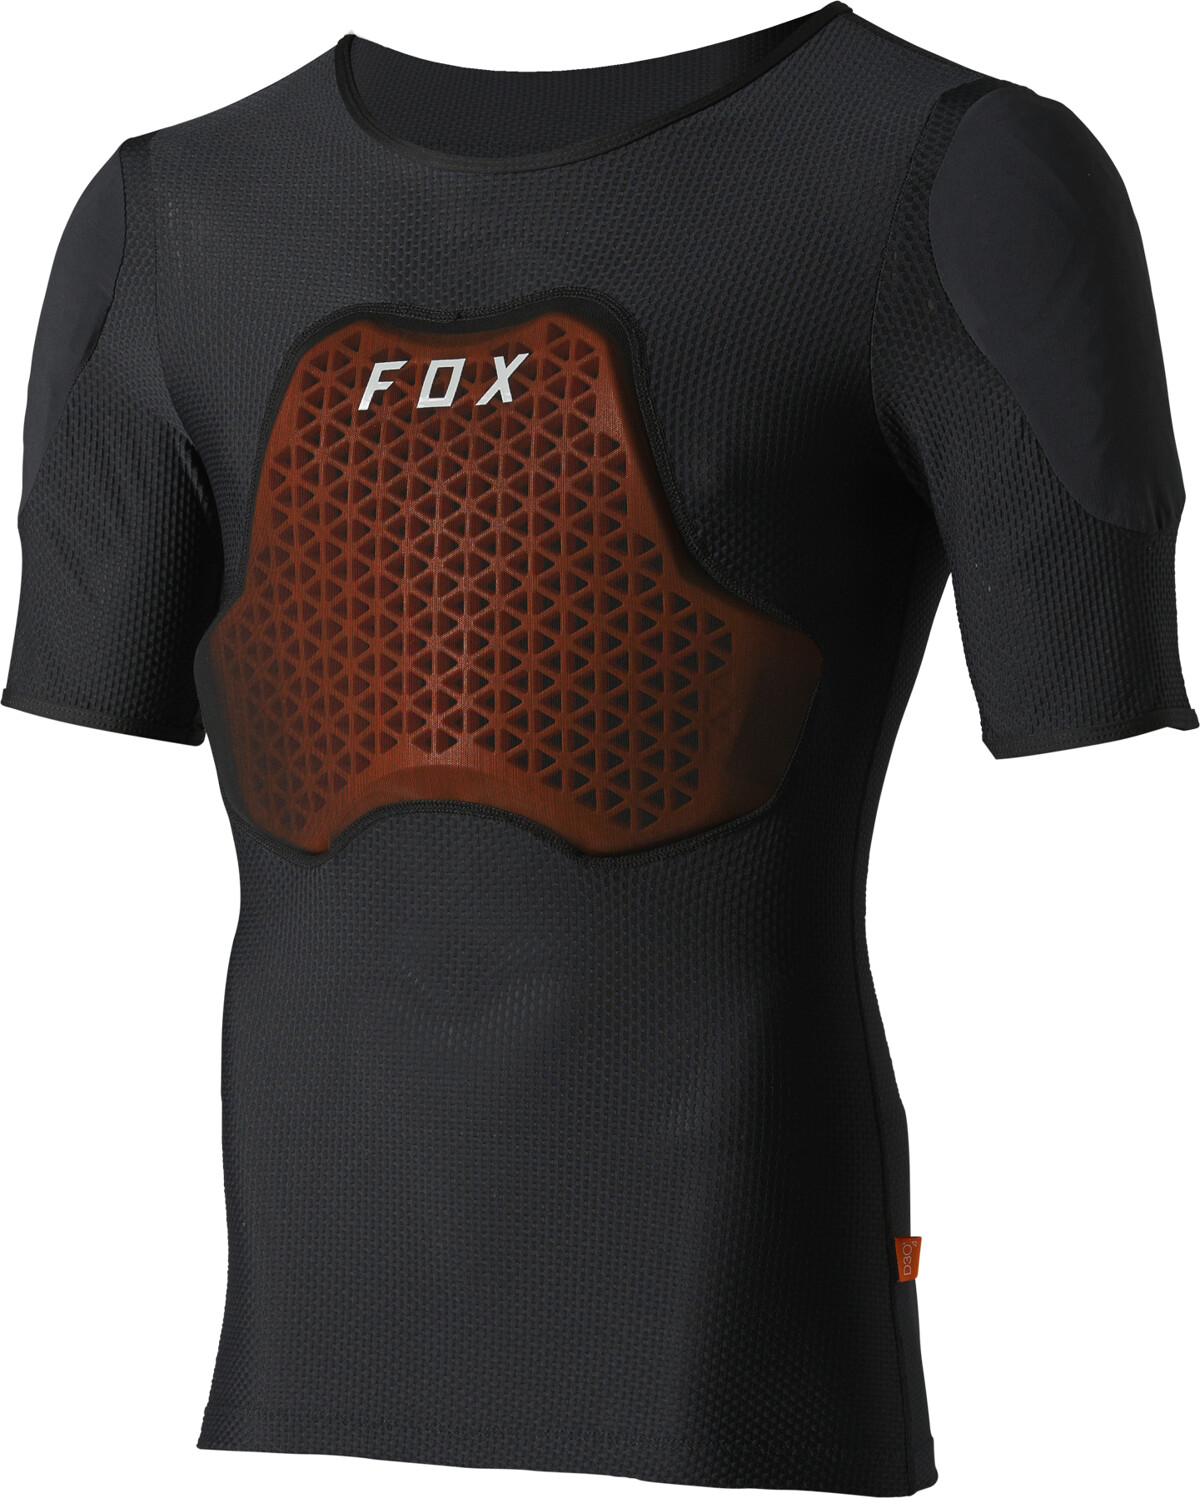 Konkurrere hjerte Mindst Fox Racing Baseframe pro ss xxl | FOX Racing tøj | varenr.: 27426-001-2X |  Køb her